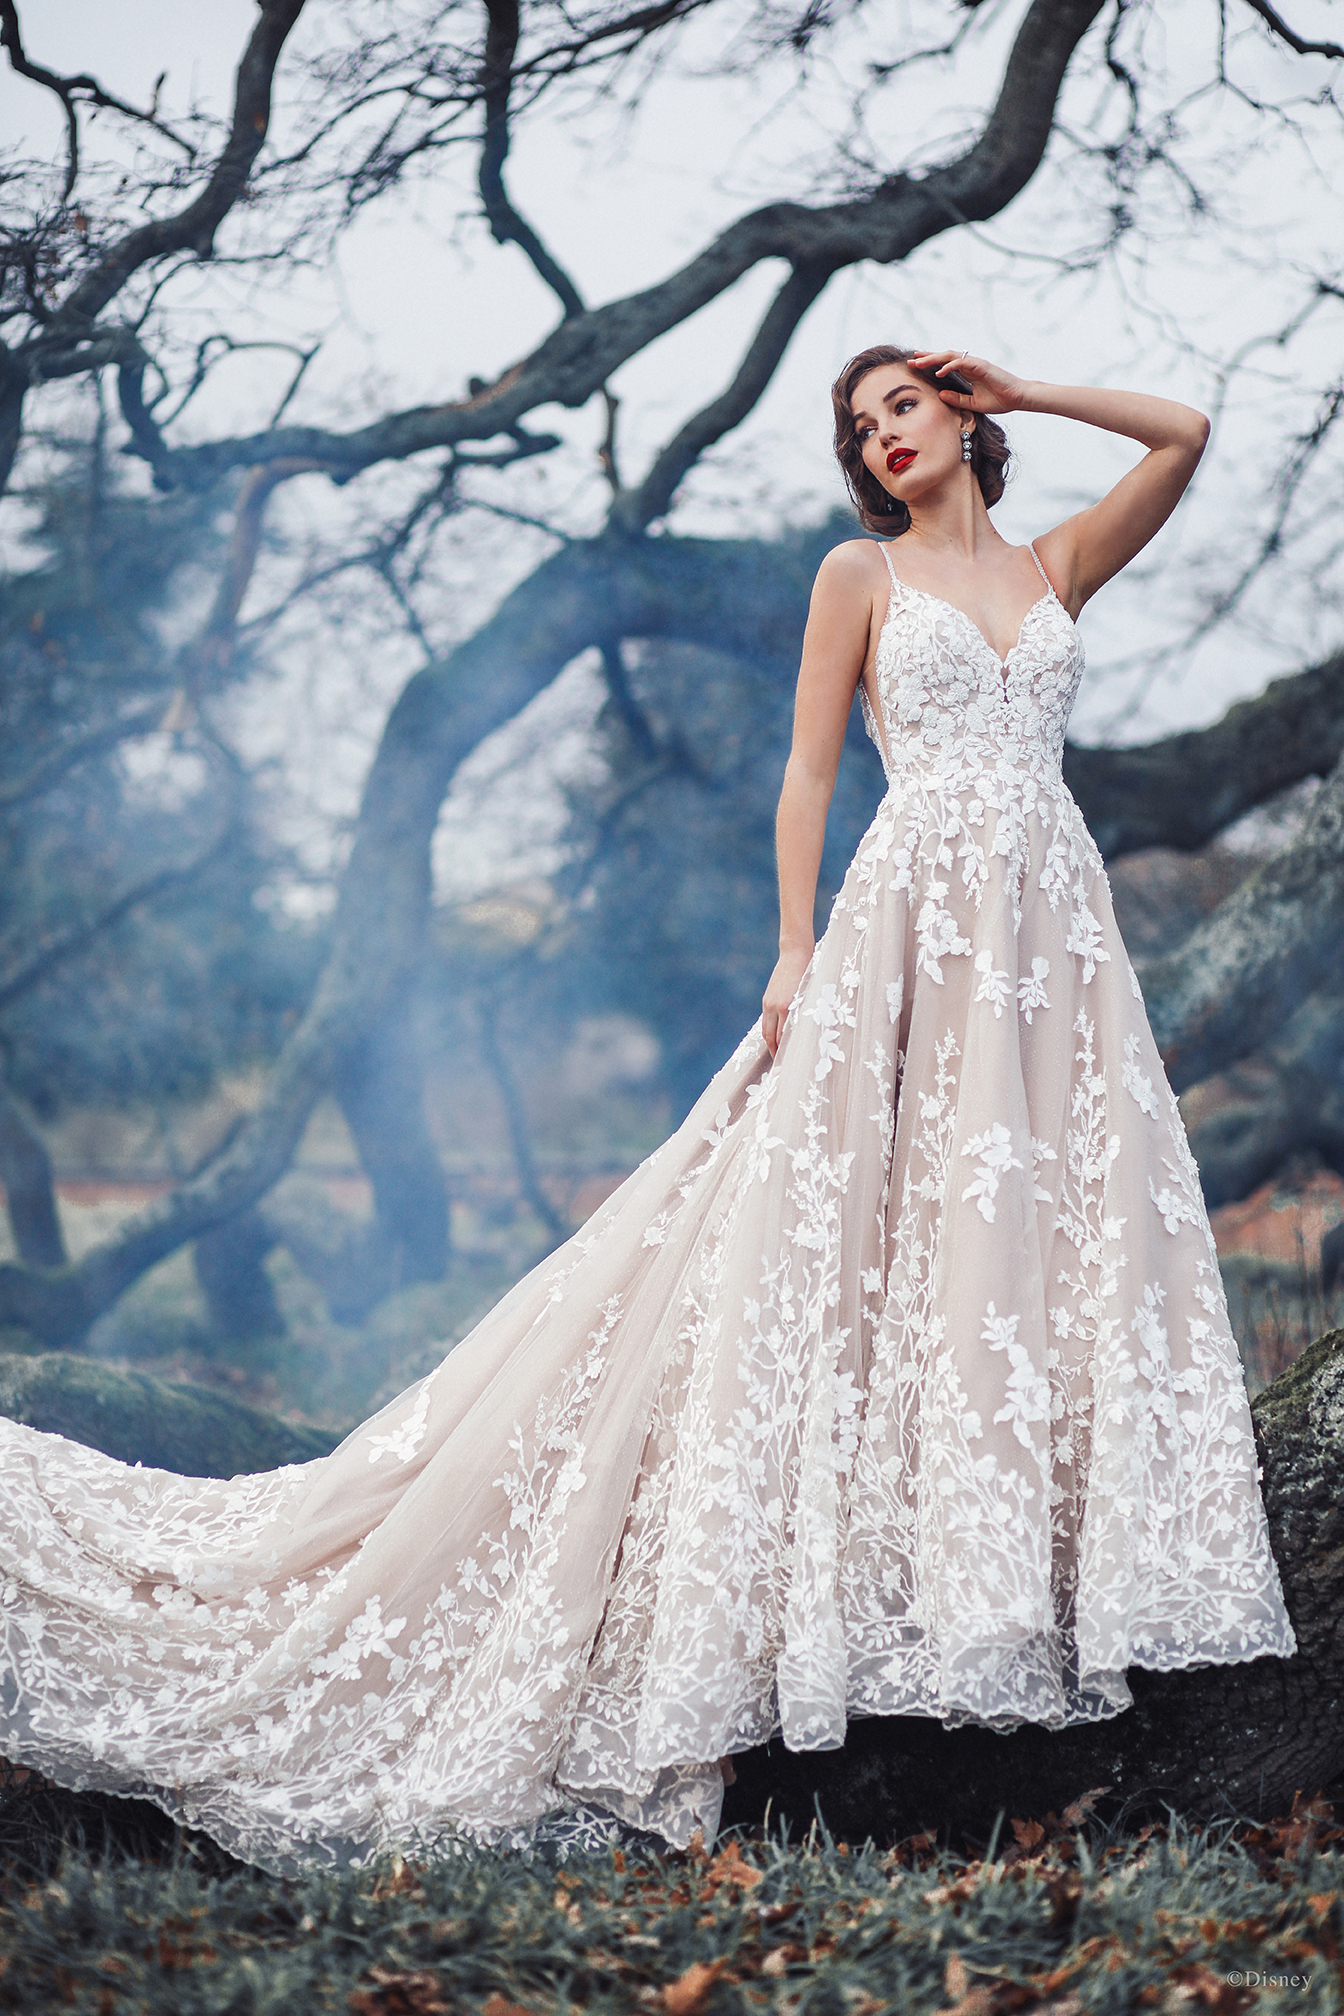 18 Fairytale Wedding Dresses for an Enchanted, Whimsical Look